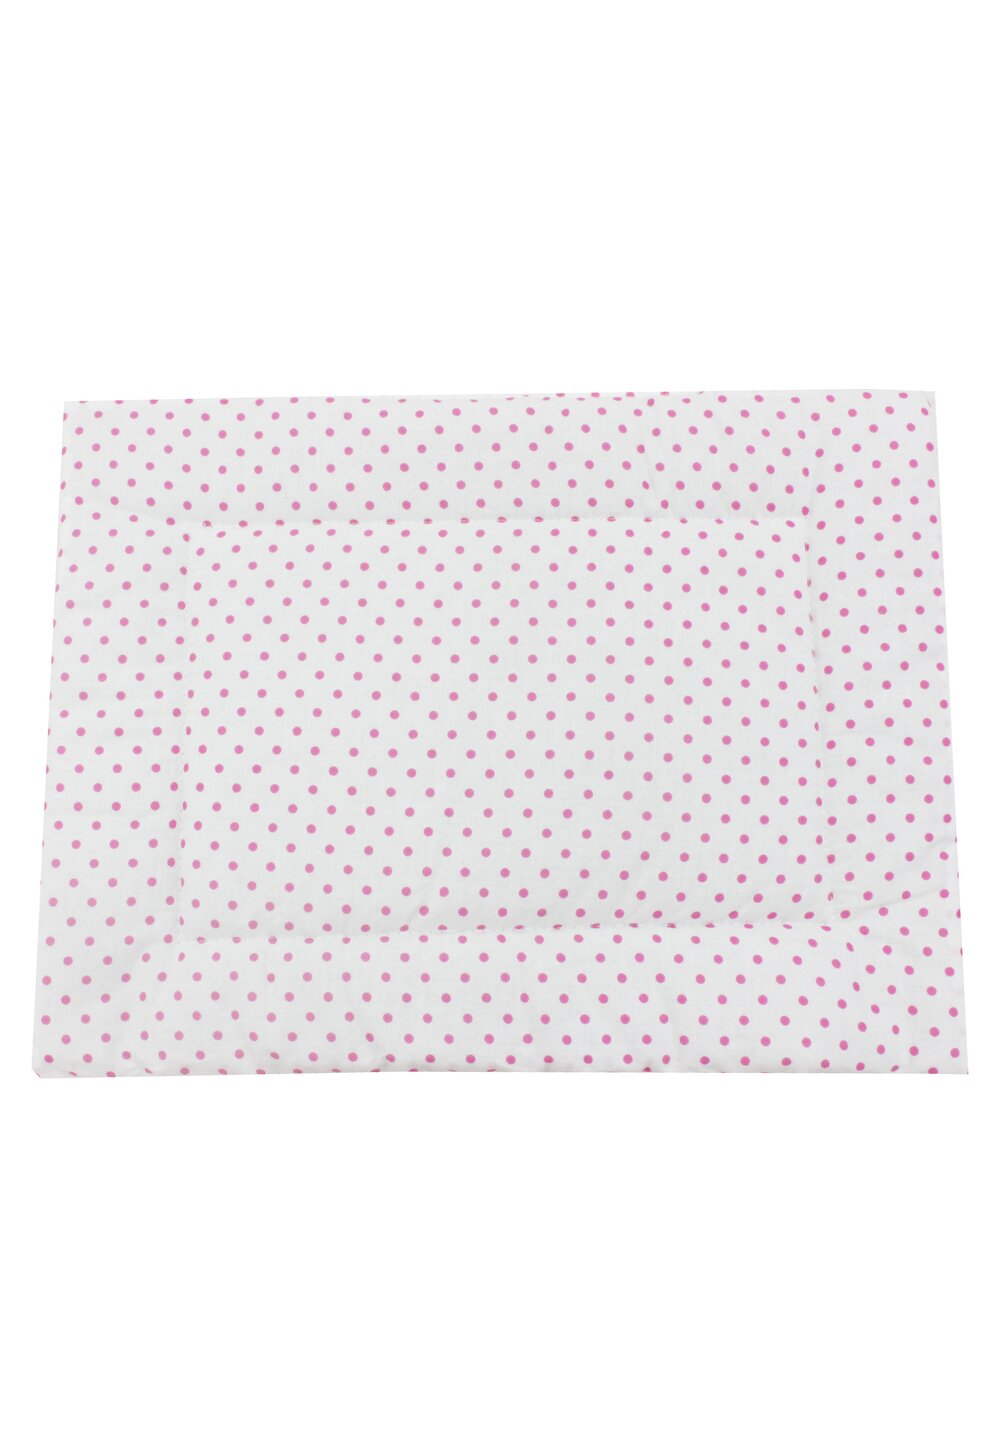 Perna slim, bumbac, buline roz, alb, 37 x 28 cm